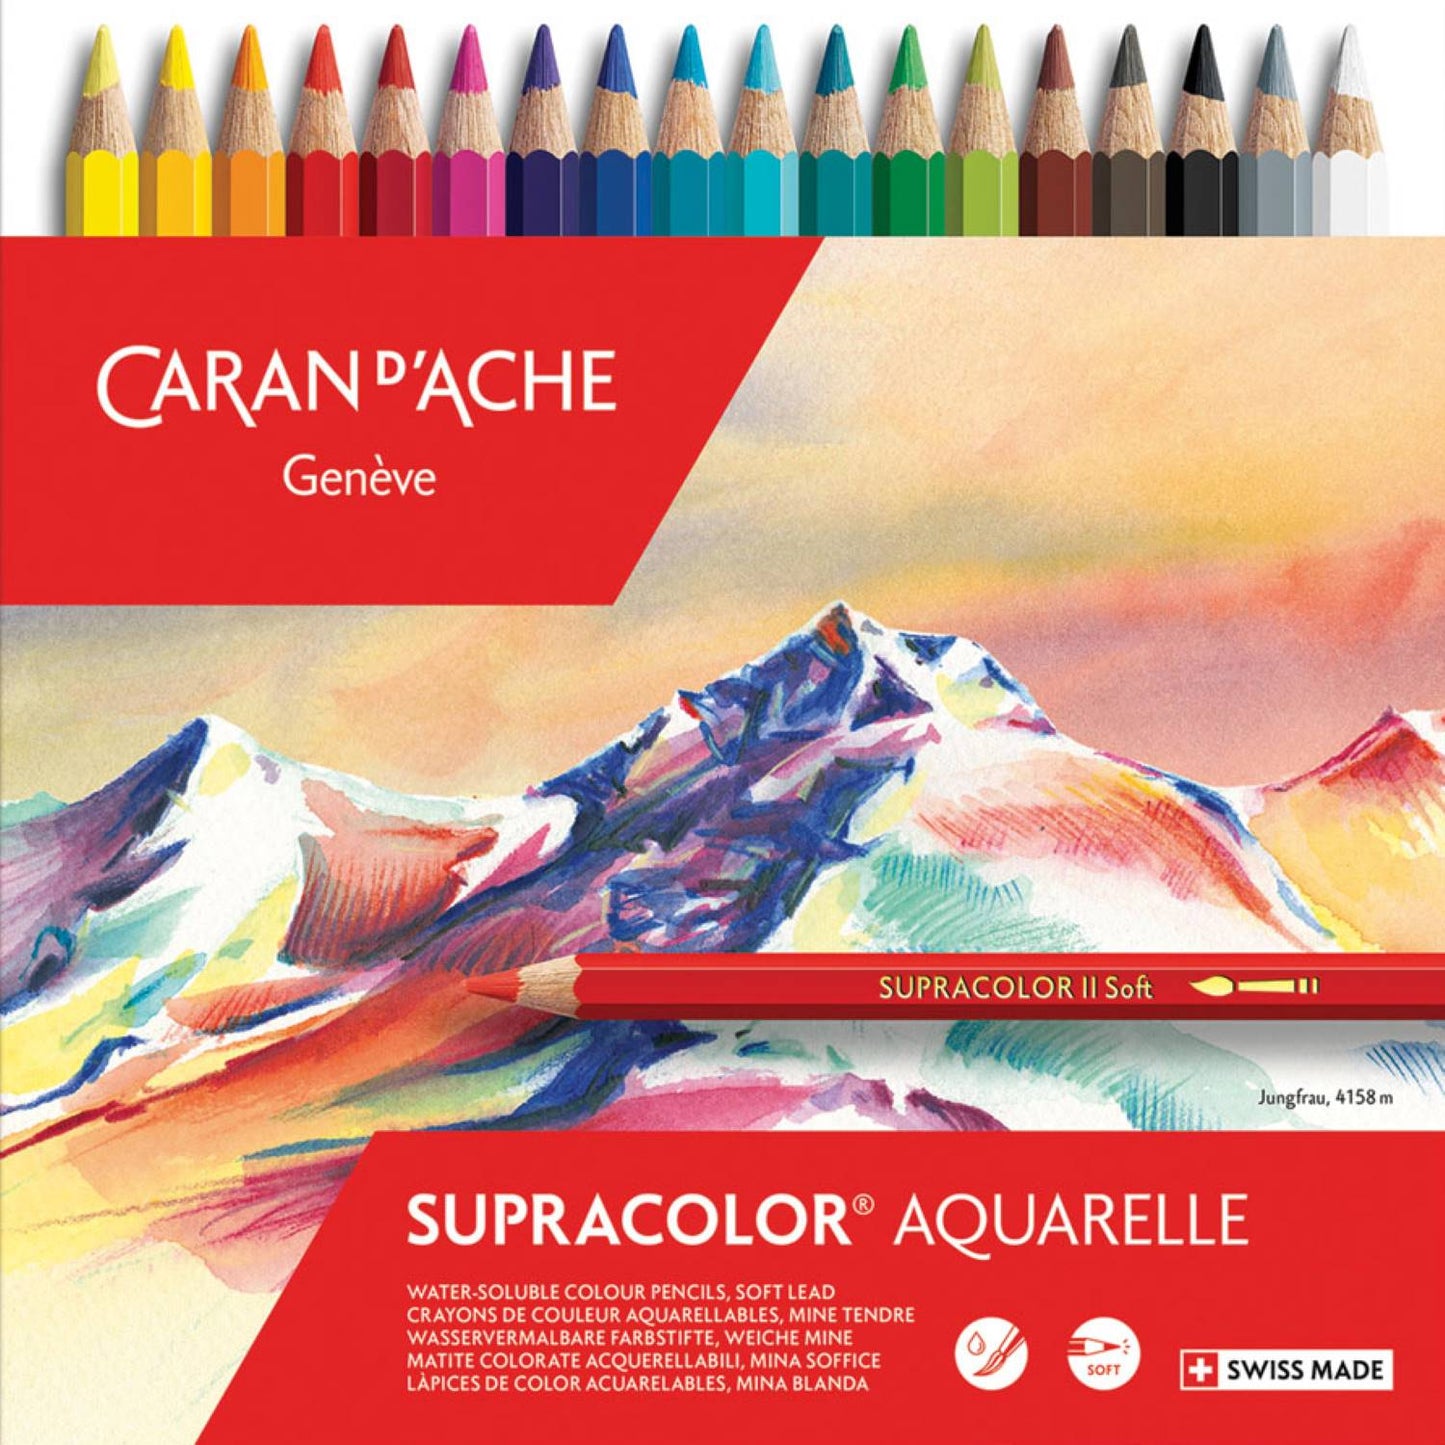 Caran d'Ache Supracolor II [colours 001 to 131]